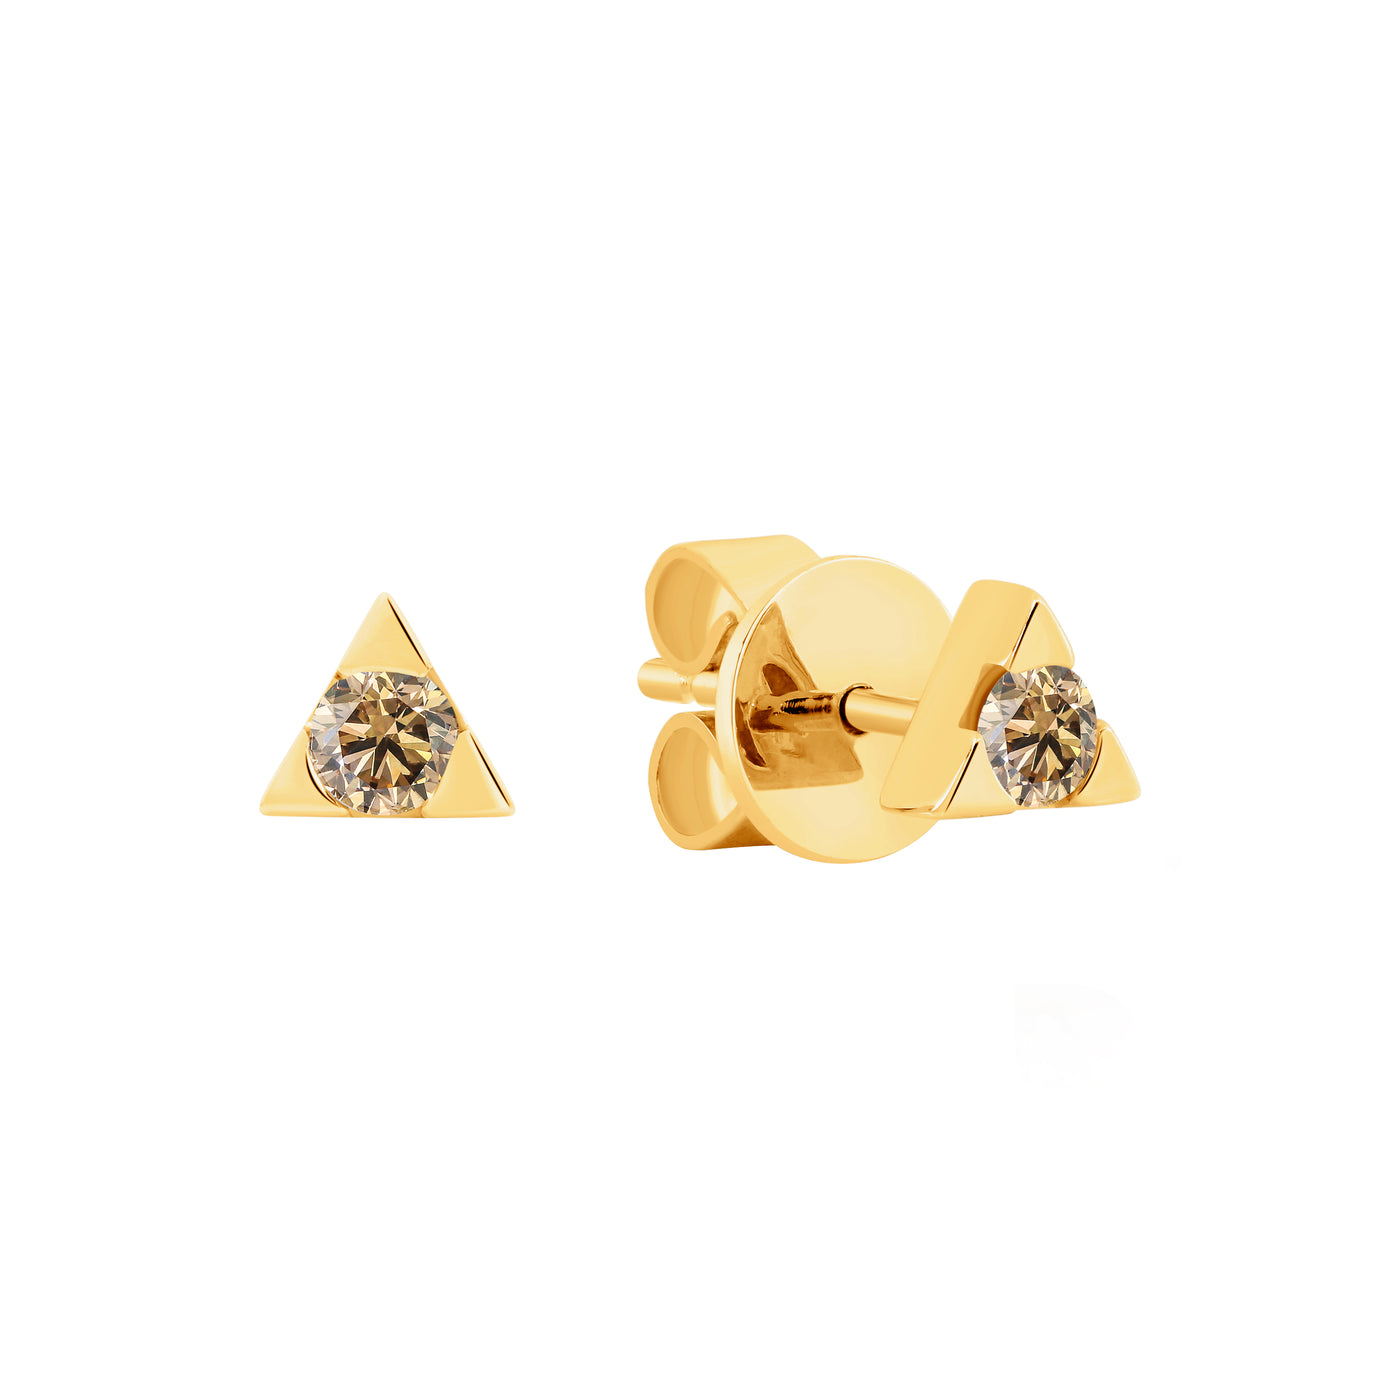 Australian Chocolate Diamonds - "Bermuda Earrings"